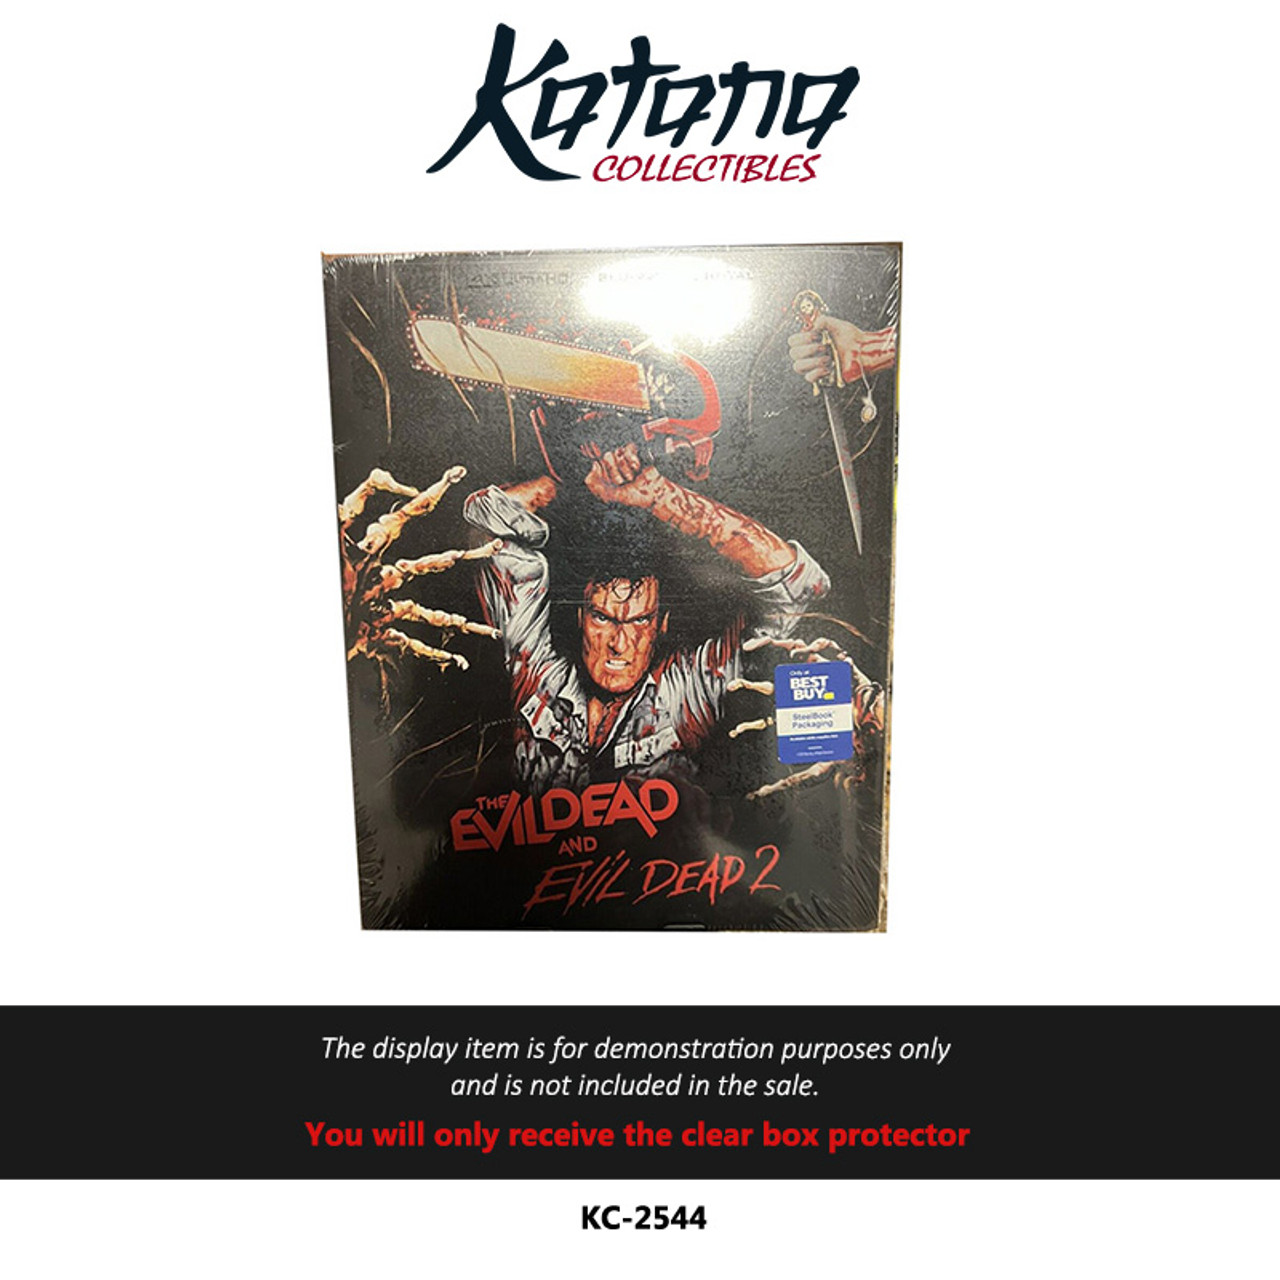 Katana Collectibles Protector For Evil Dead Steelbook Collection